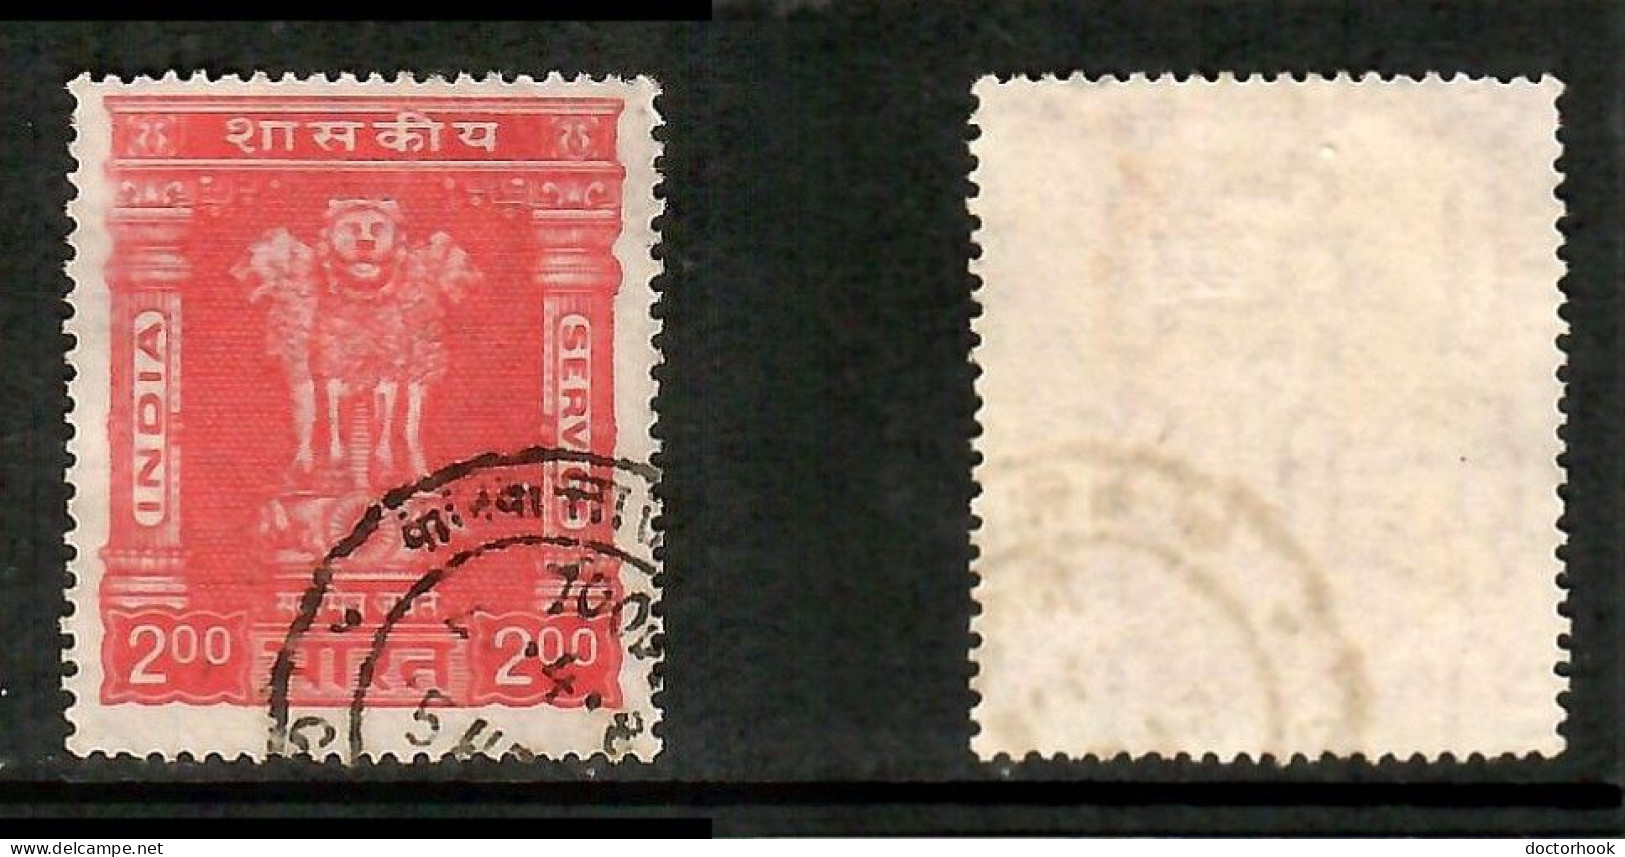 INDIA Scott # O 183 USED (CONDITION PER SCAN) (Stamp Scan # 1034-14) - Dienstmarken